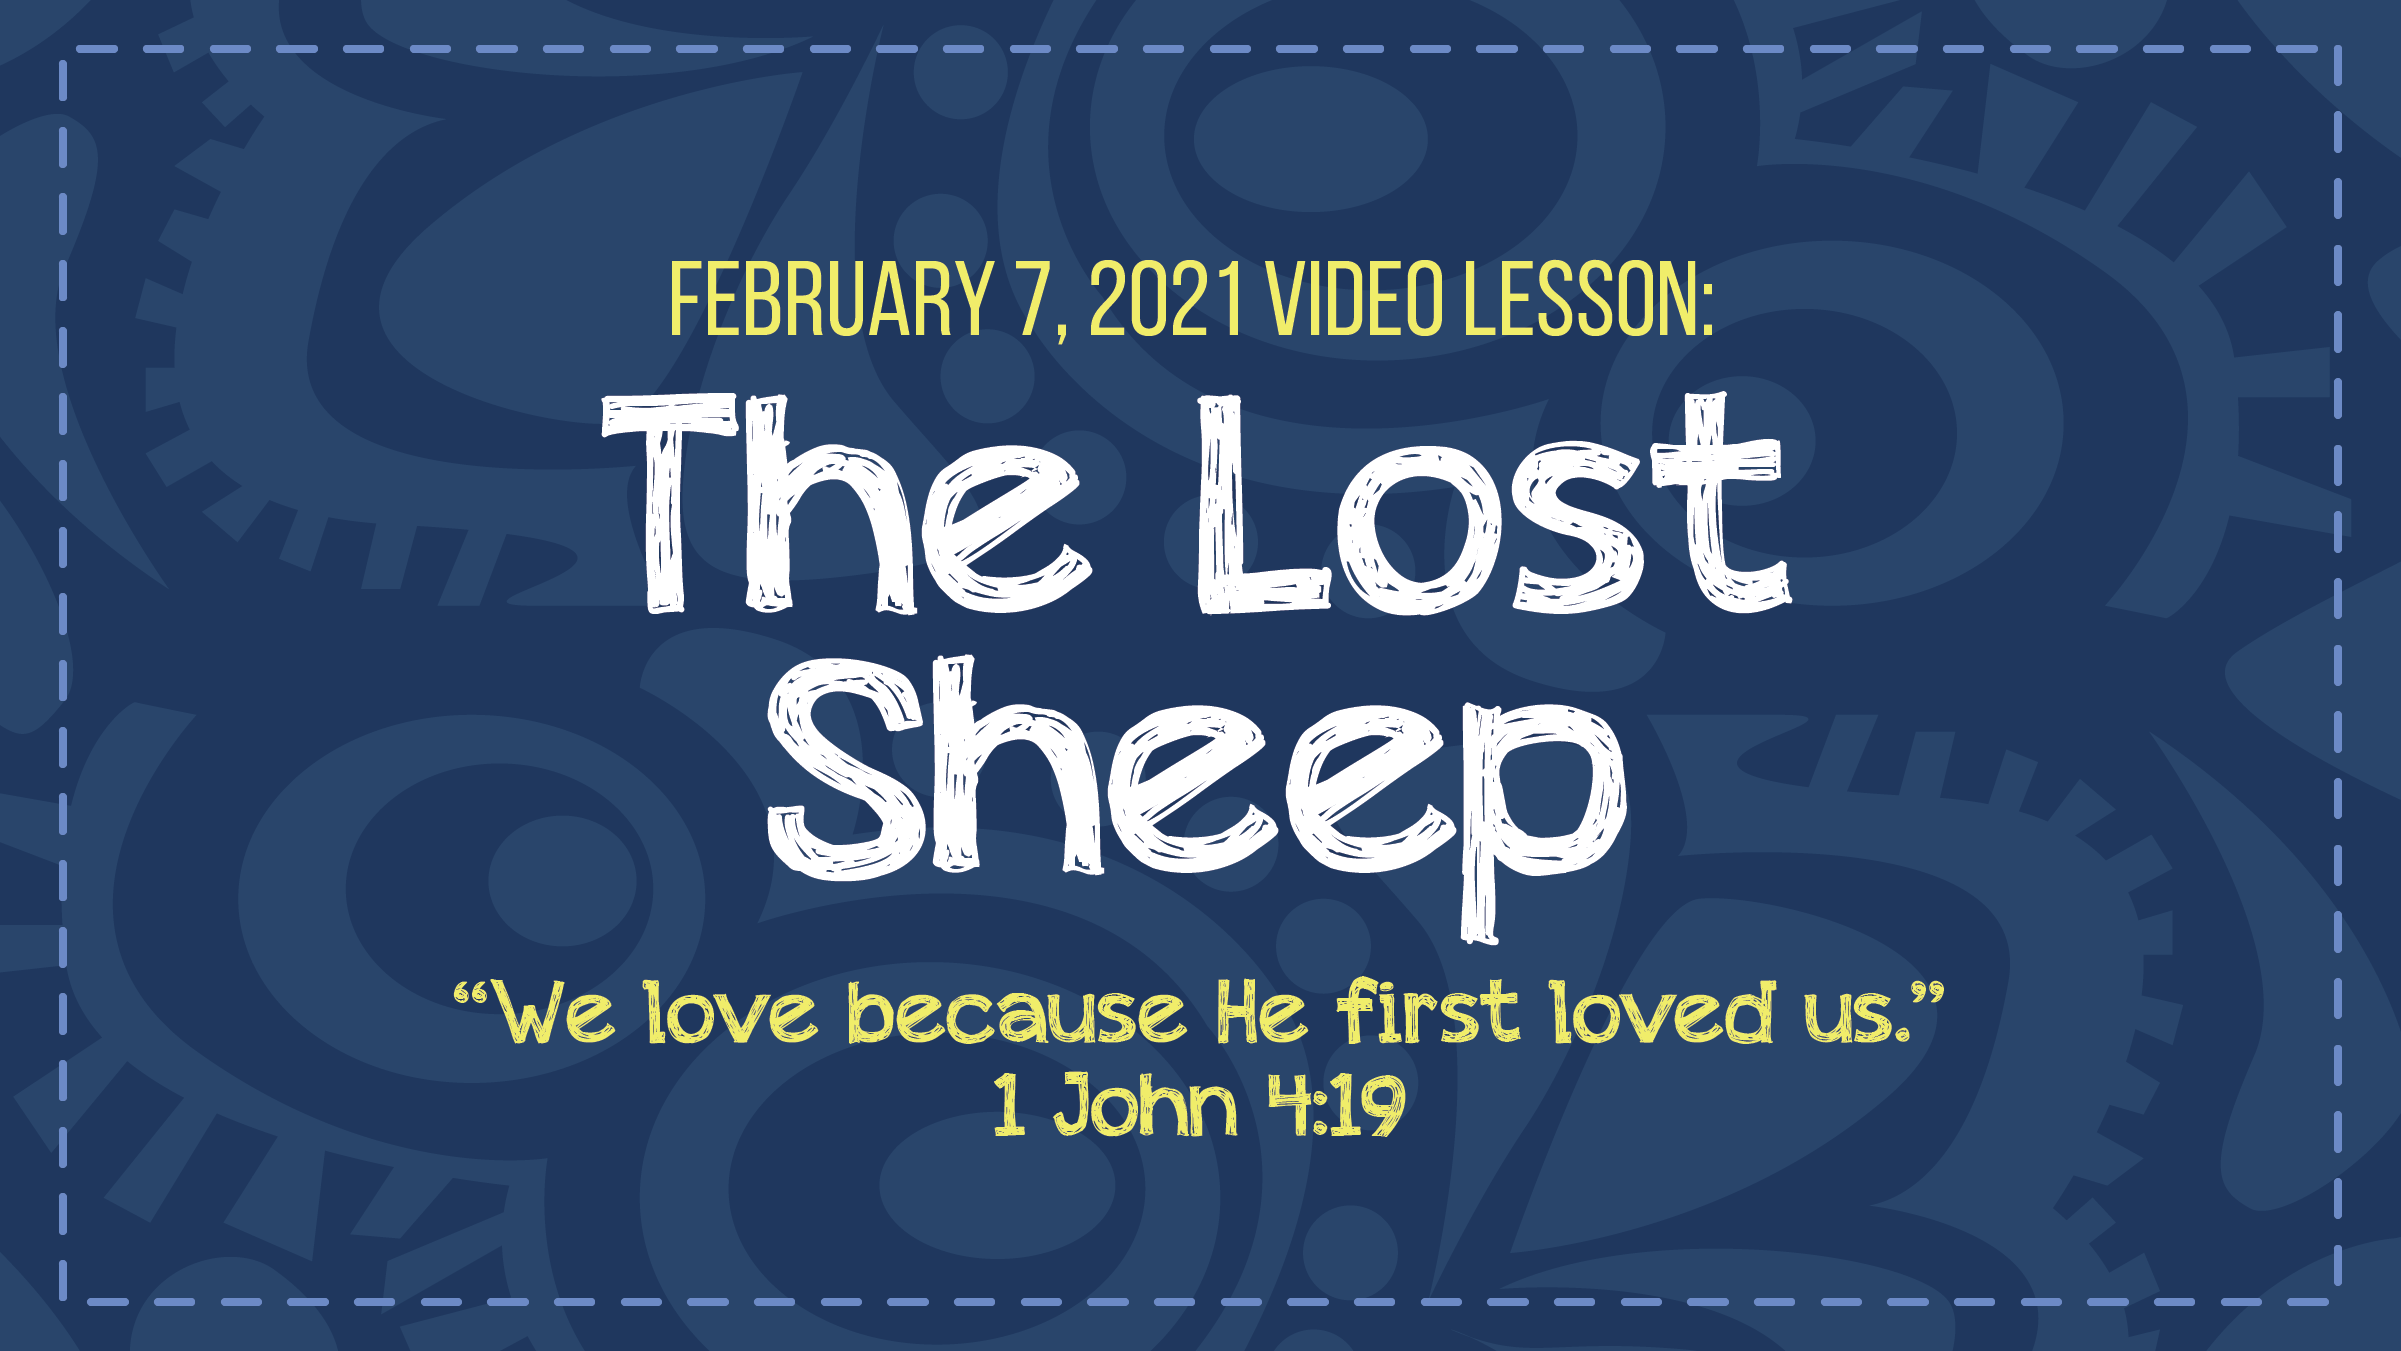 February 7, 2021 Video Lesson